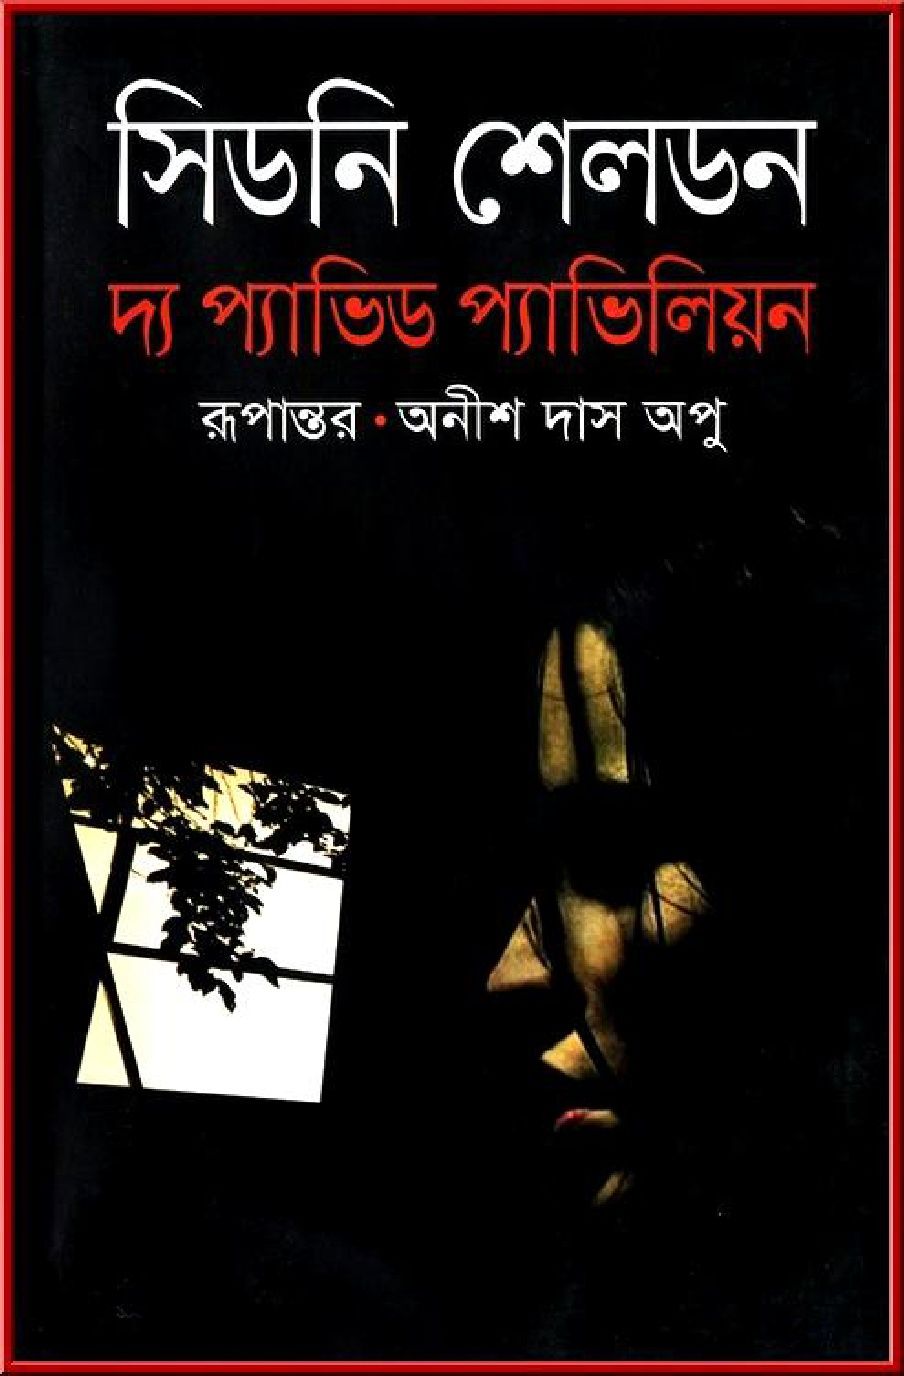 The da vinci code bangla pdf book free download 2017